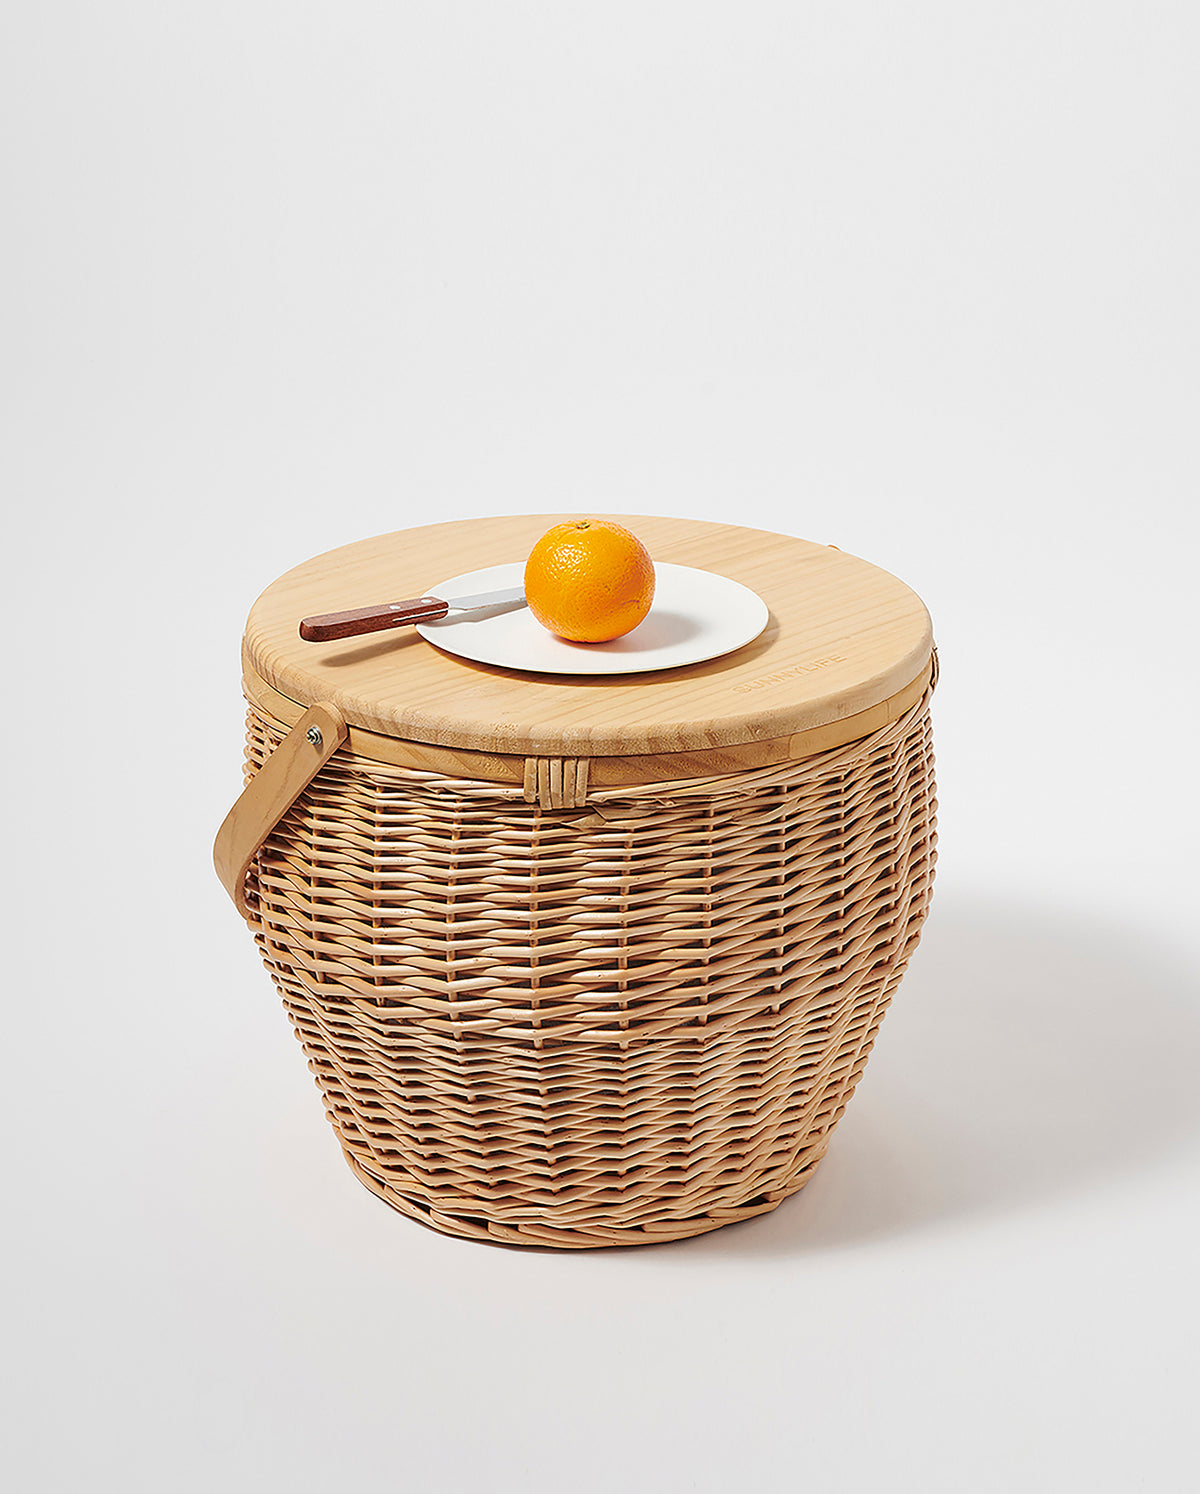 Round Picnic Cooler Basket Natural